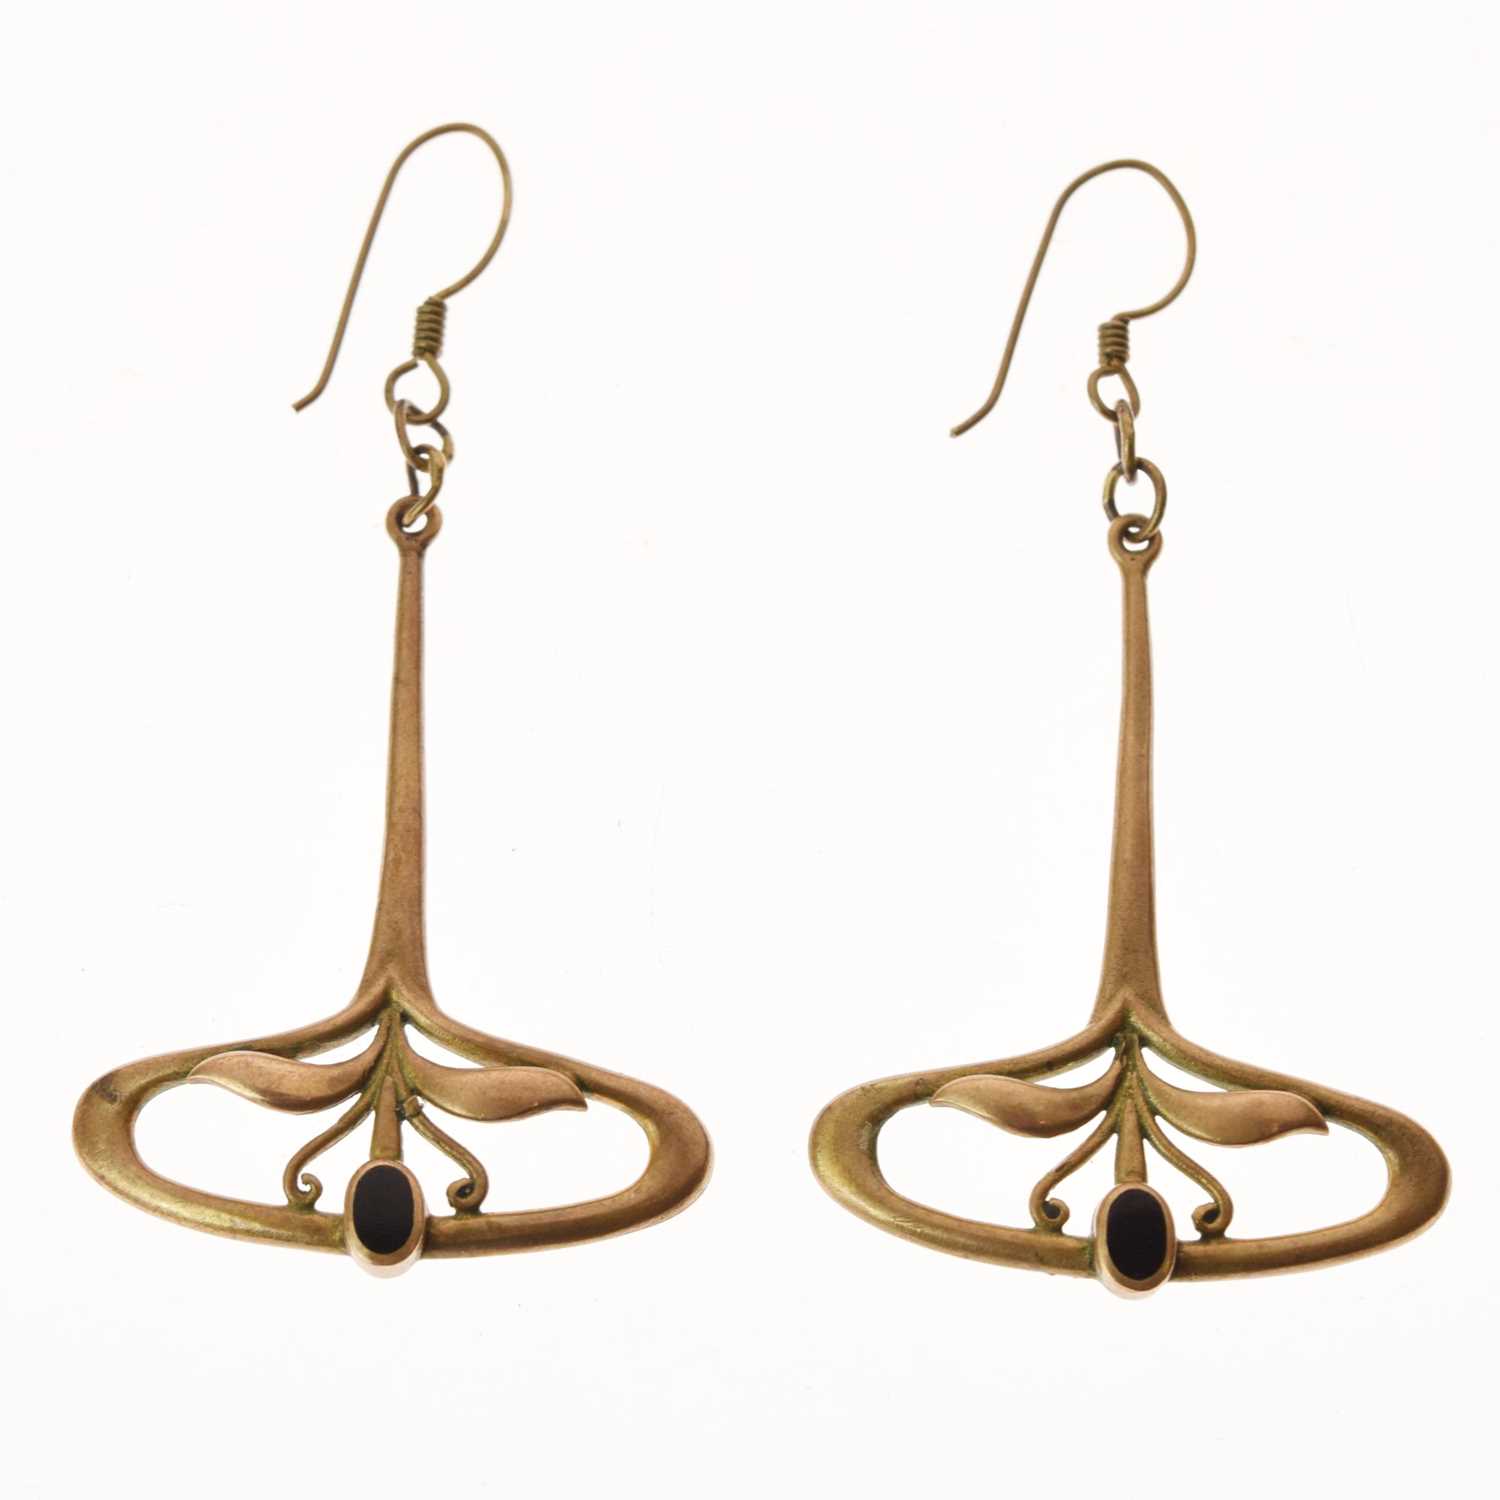 Pair of Art Nouveau style earrings